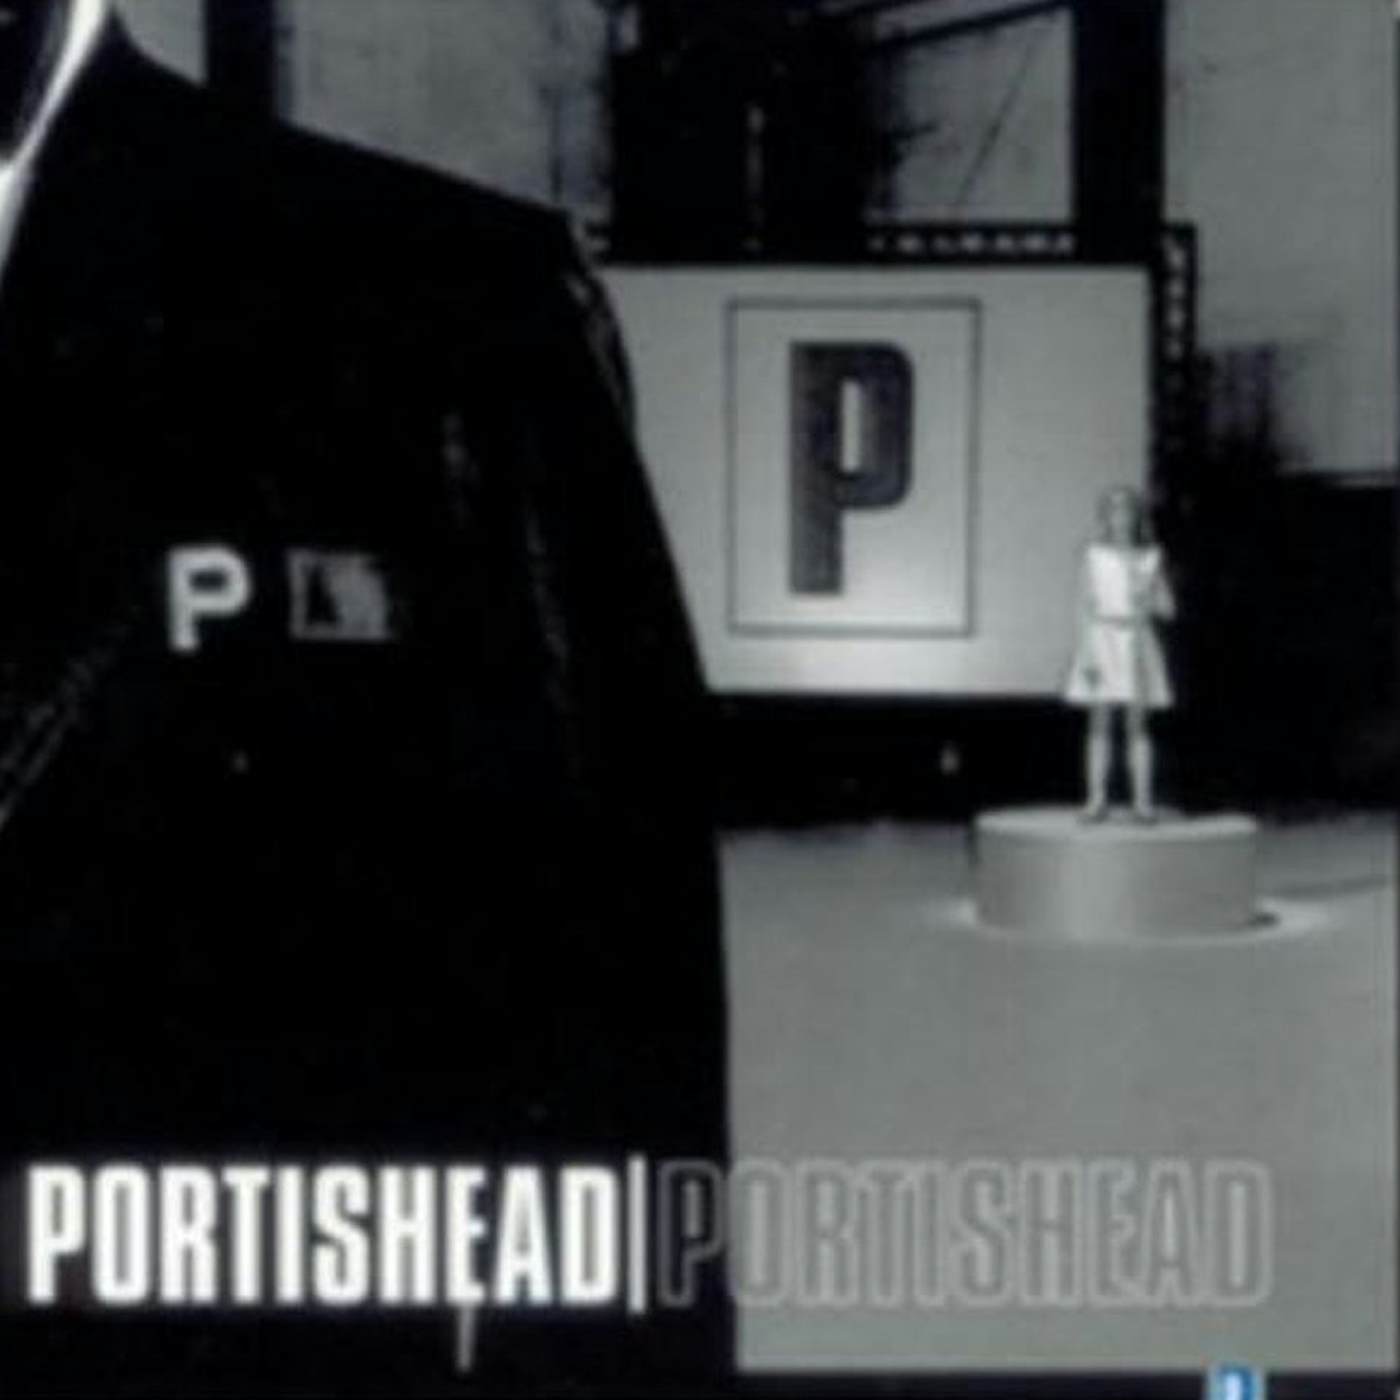 Portishead LP Vinyl Record - Portishead